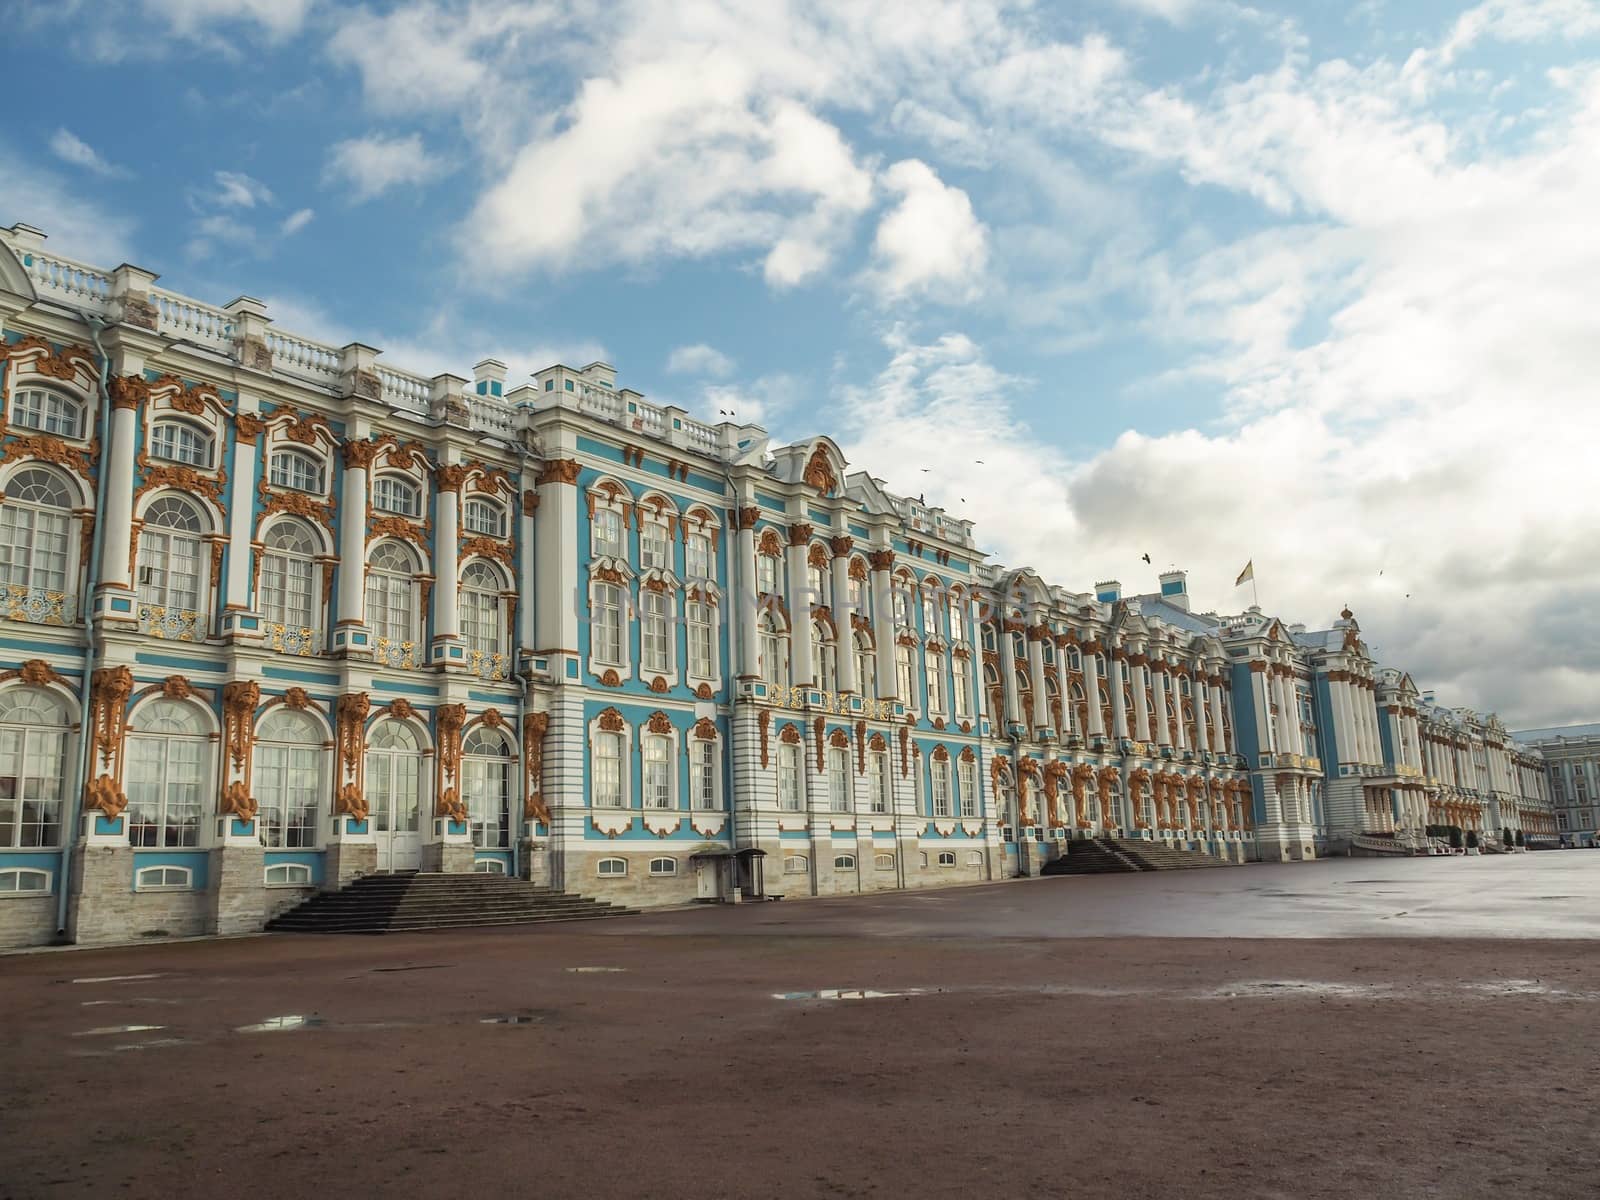 Catherine Palace in Pushkin, Russia by WernBkk